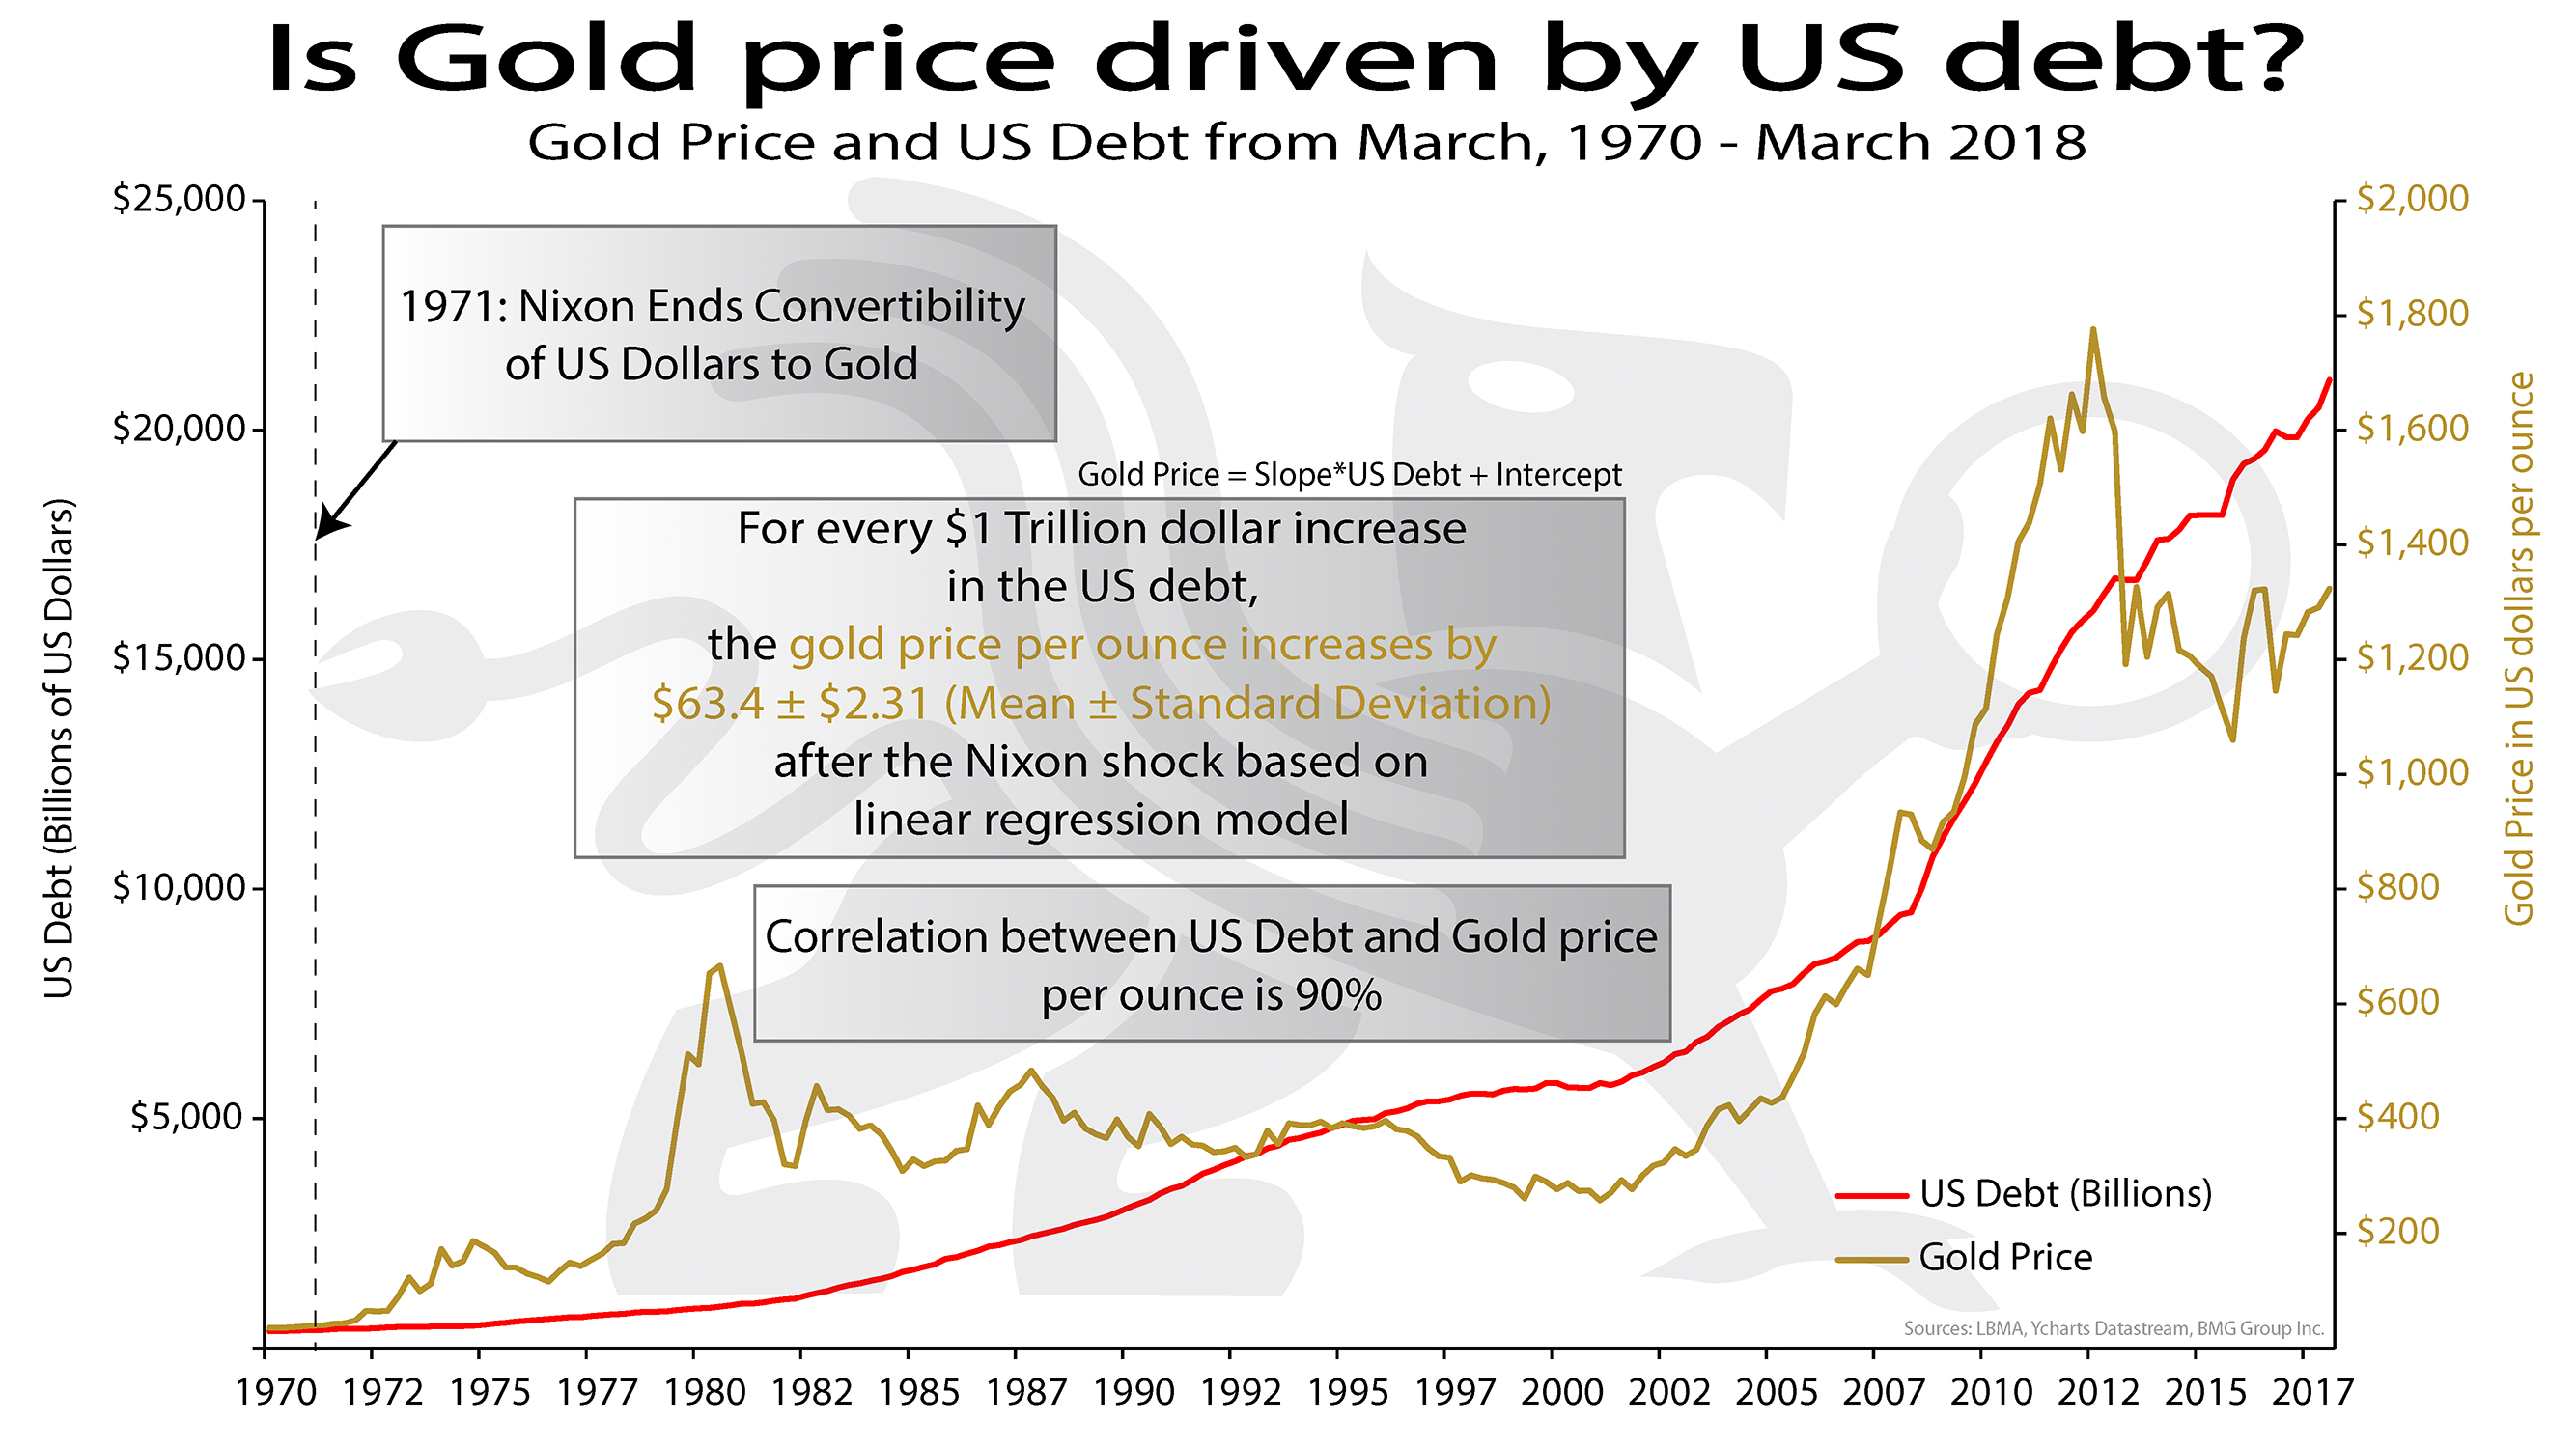 Gold 25 Year Chart